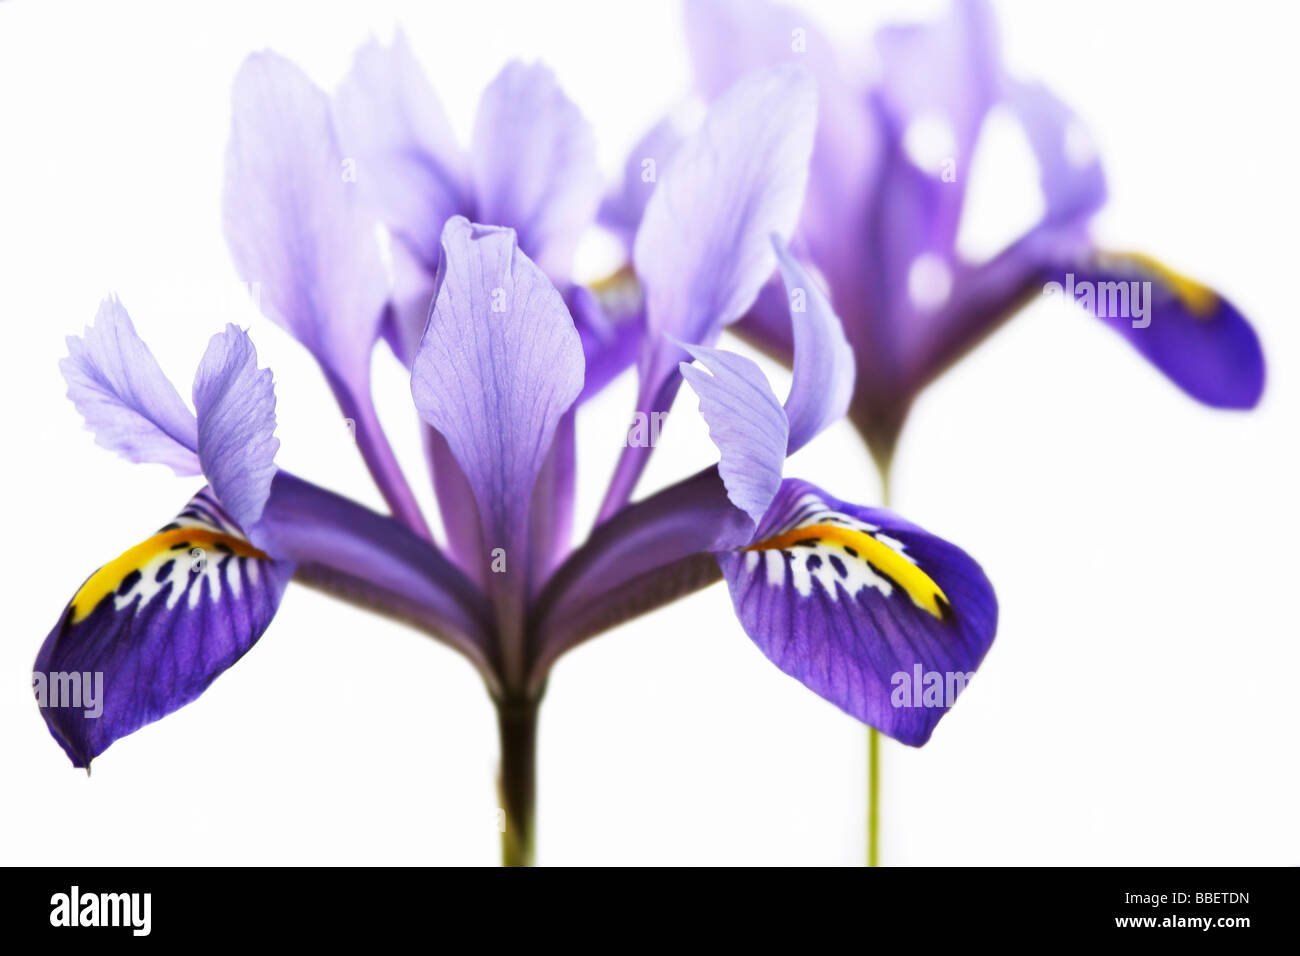 Iris flowers on white background Stock Photo